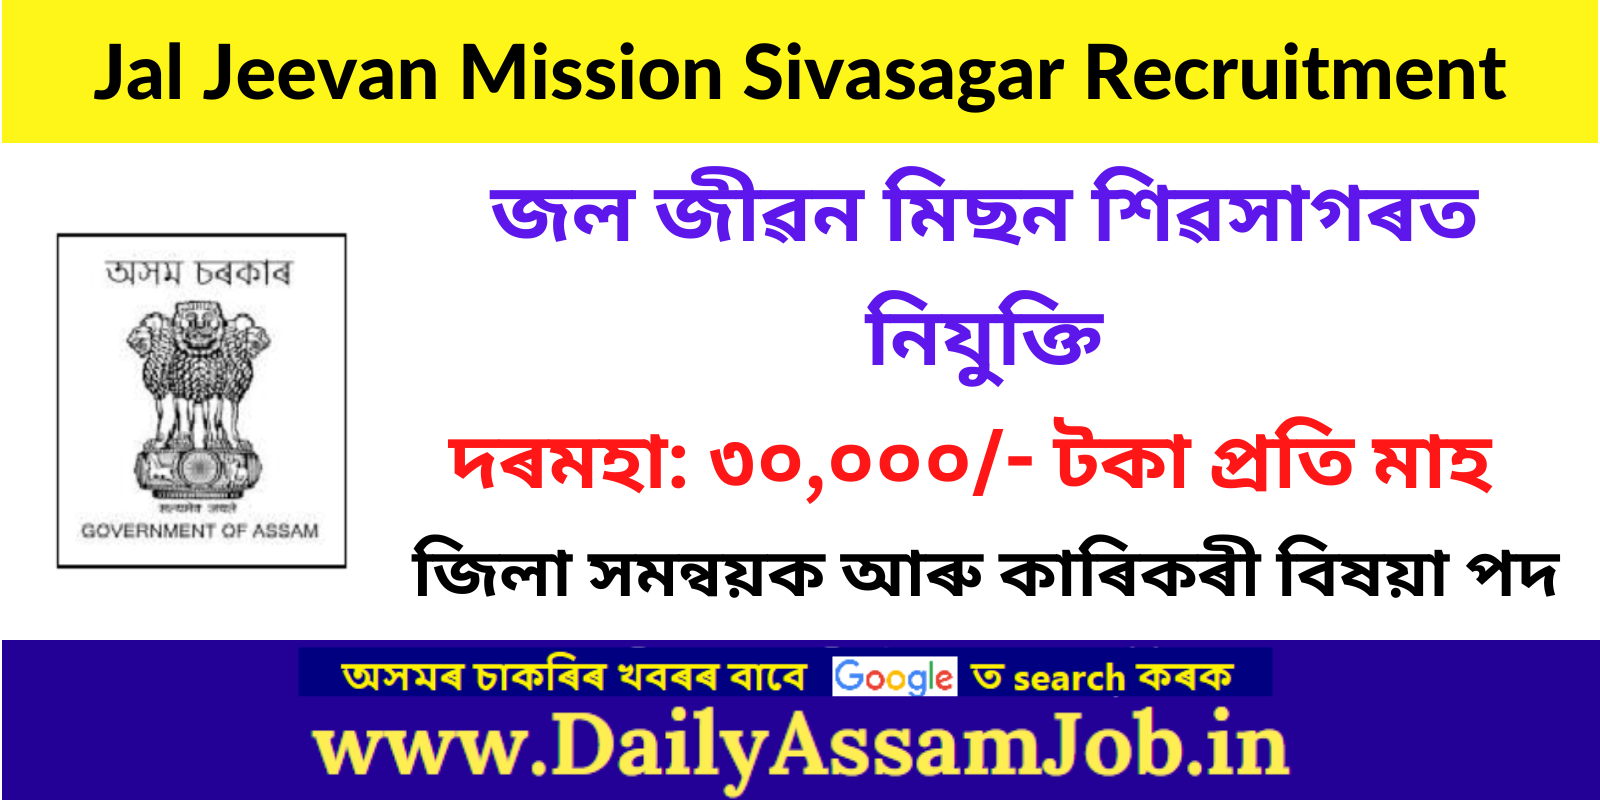 Jal Jeevan Mission Sivasagar Recruitment